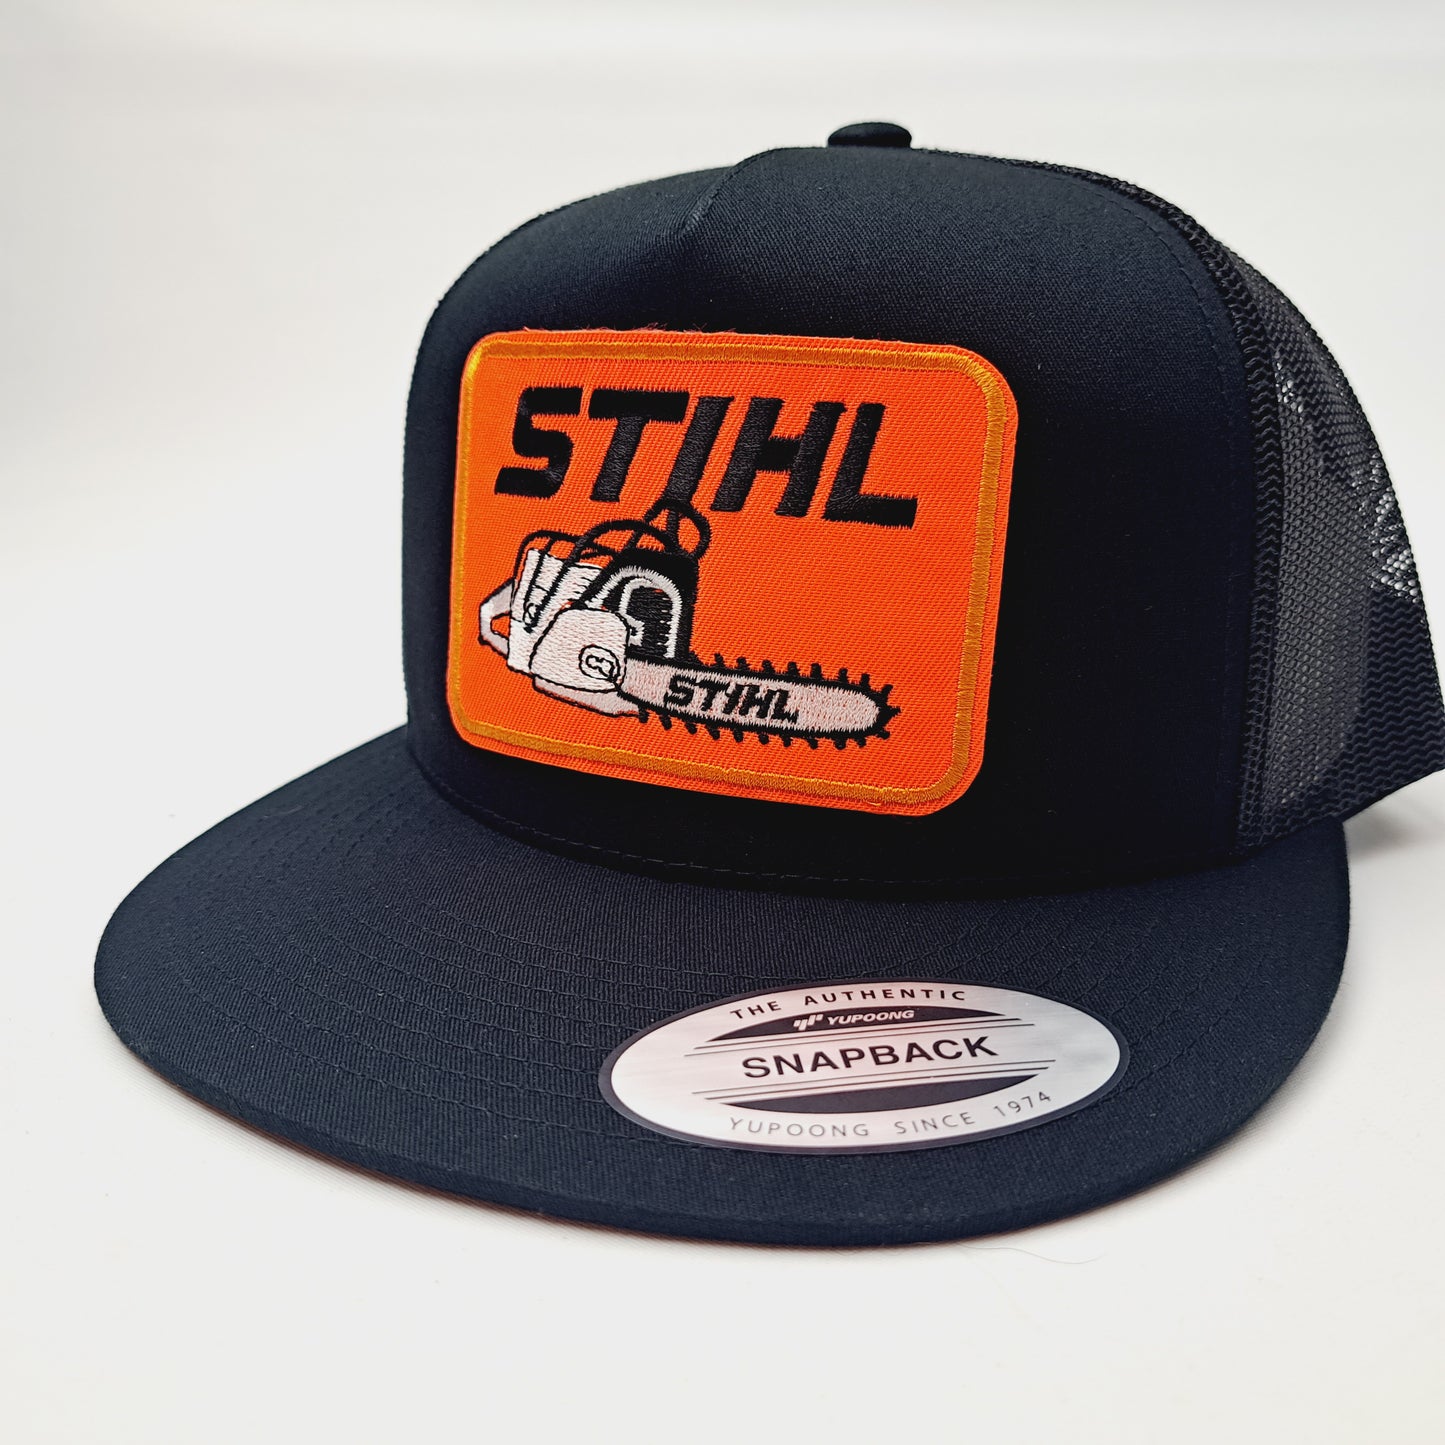 Stihl Embroidered Patch Flat Bill Trucker Mesh Snapback Hat Cap